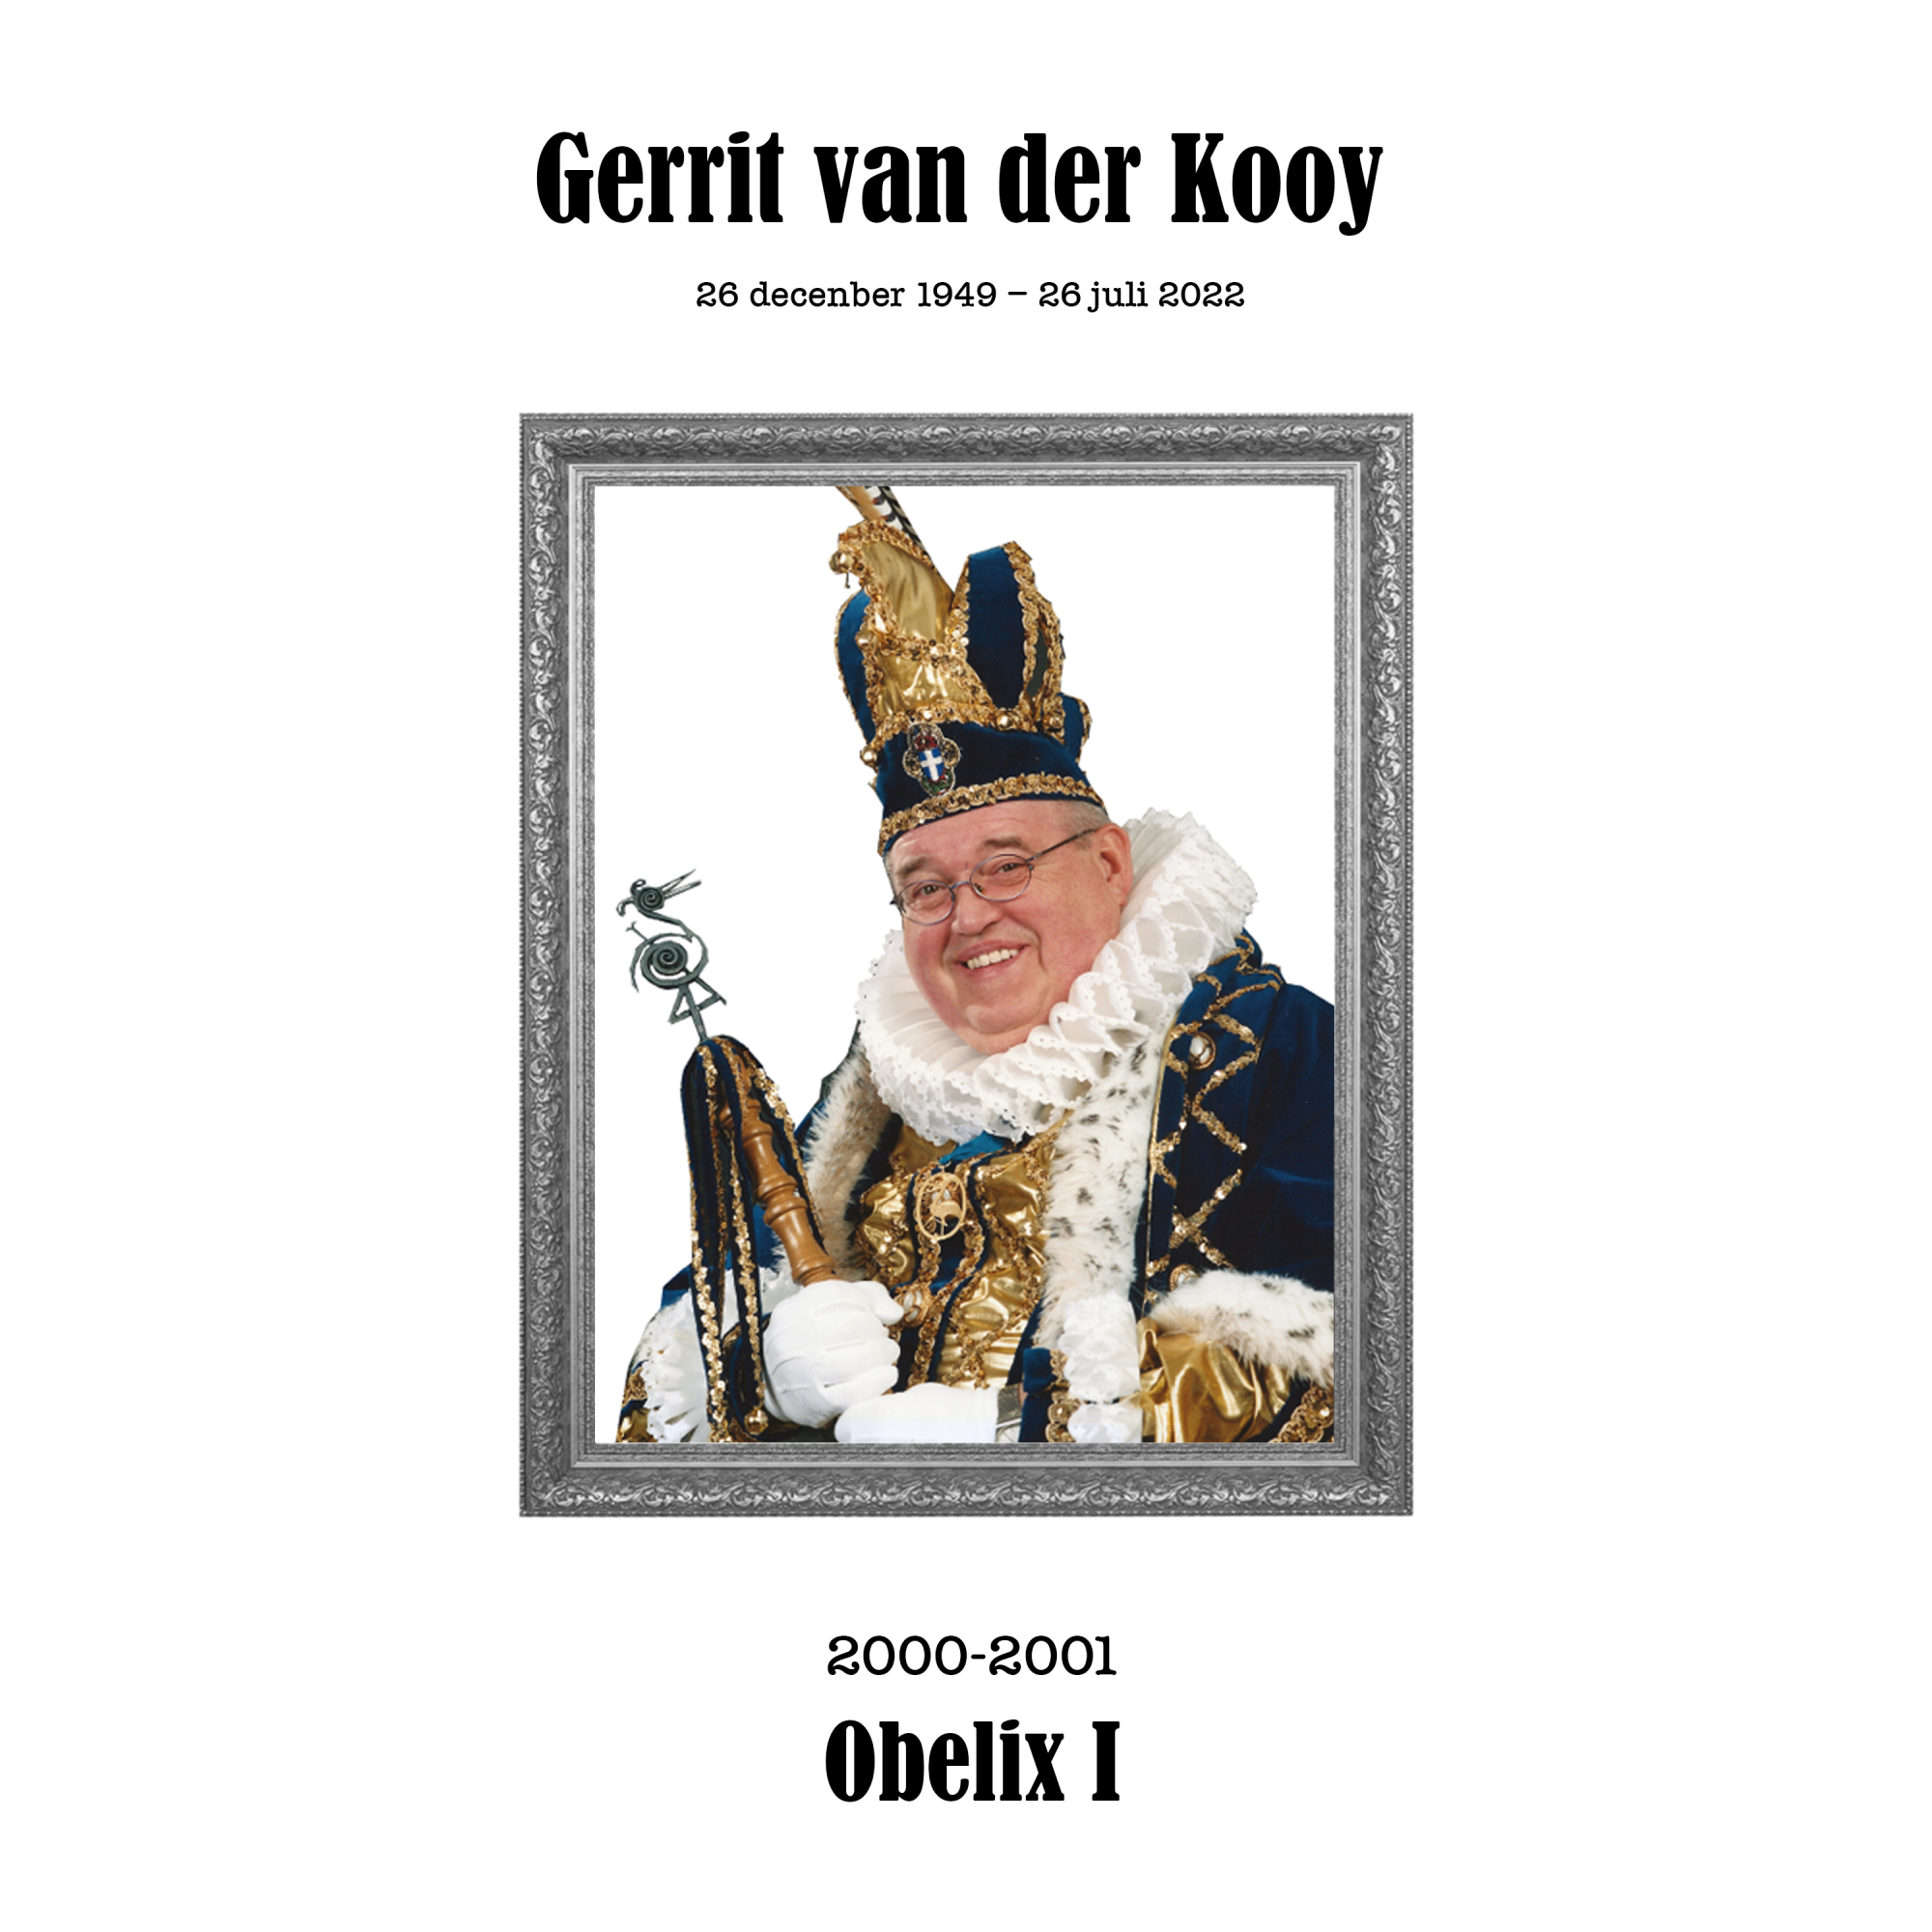 Gerrit van der Kooy